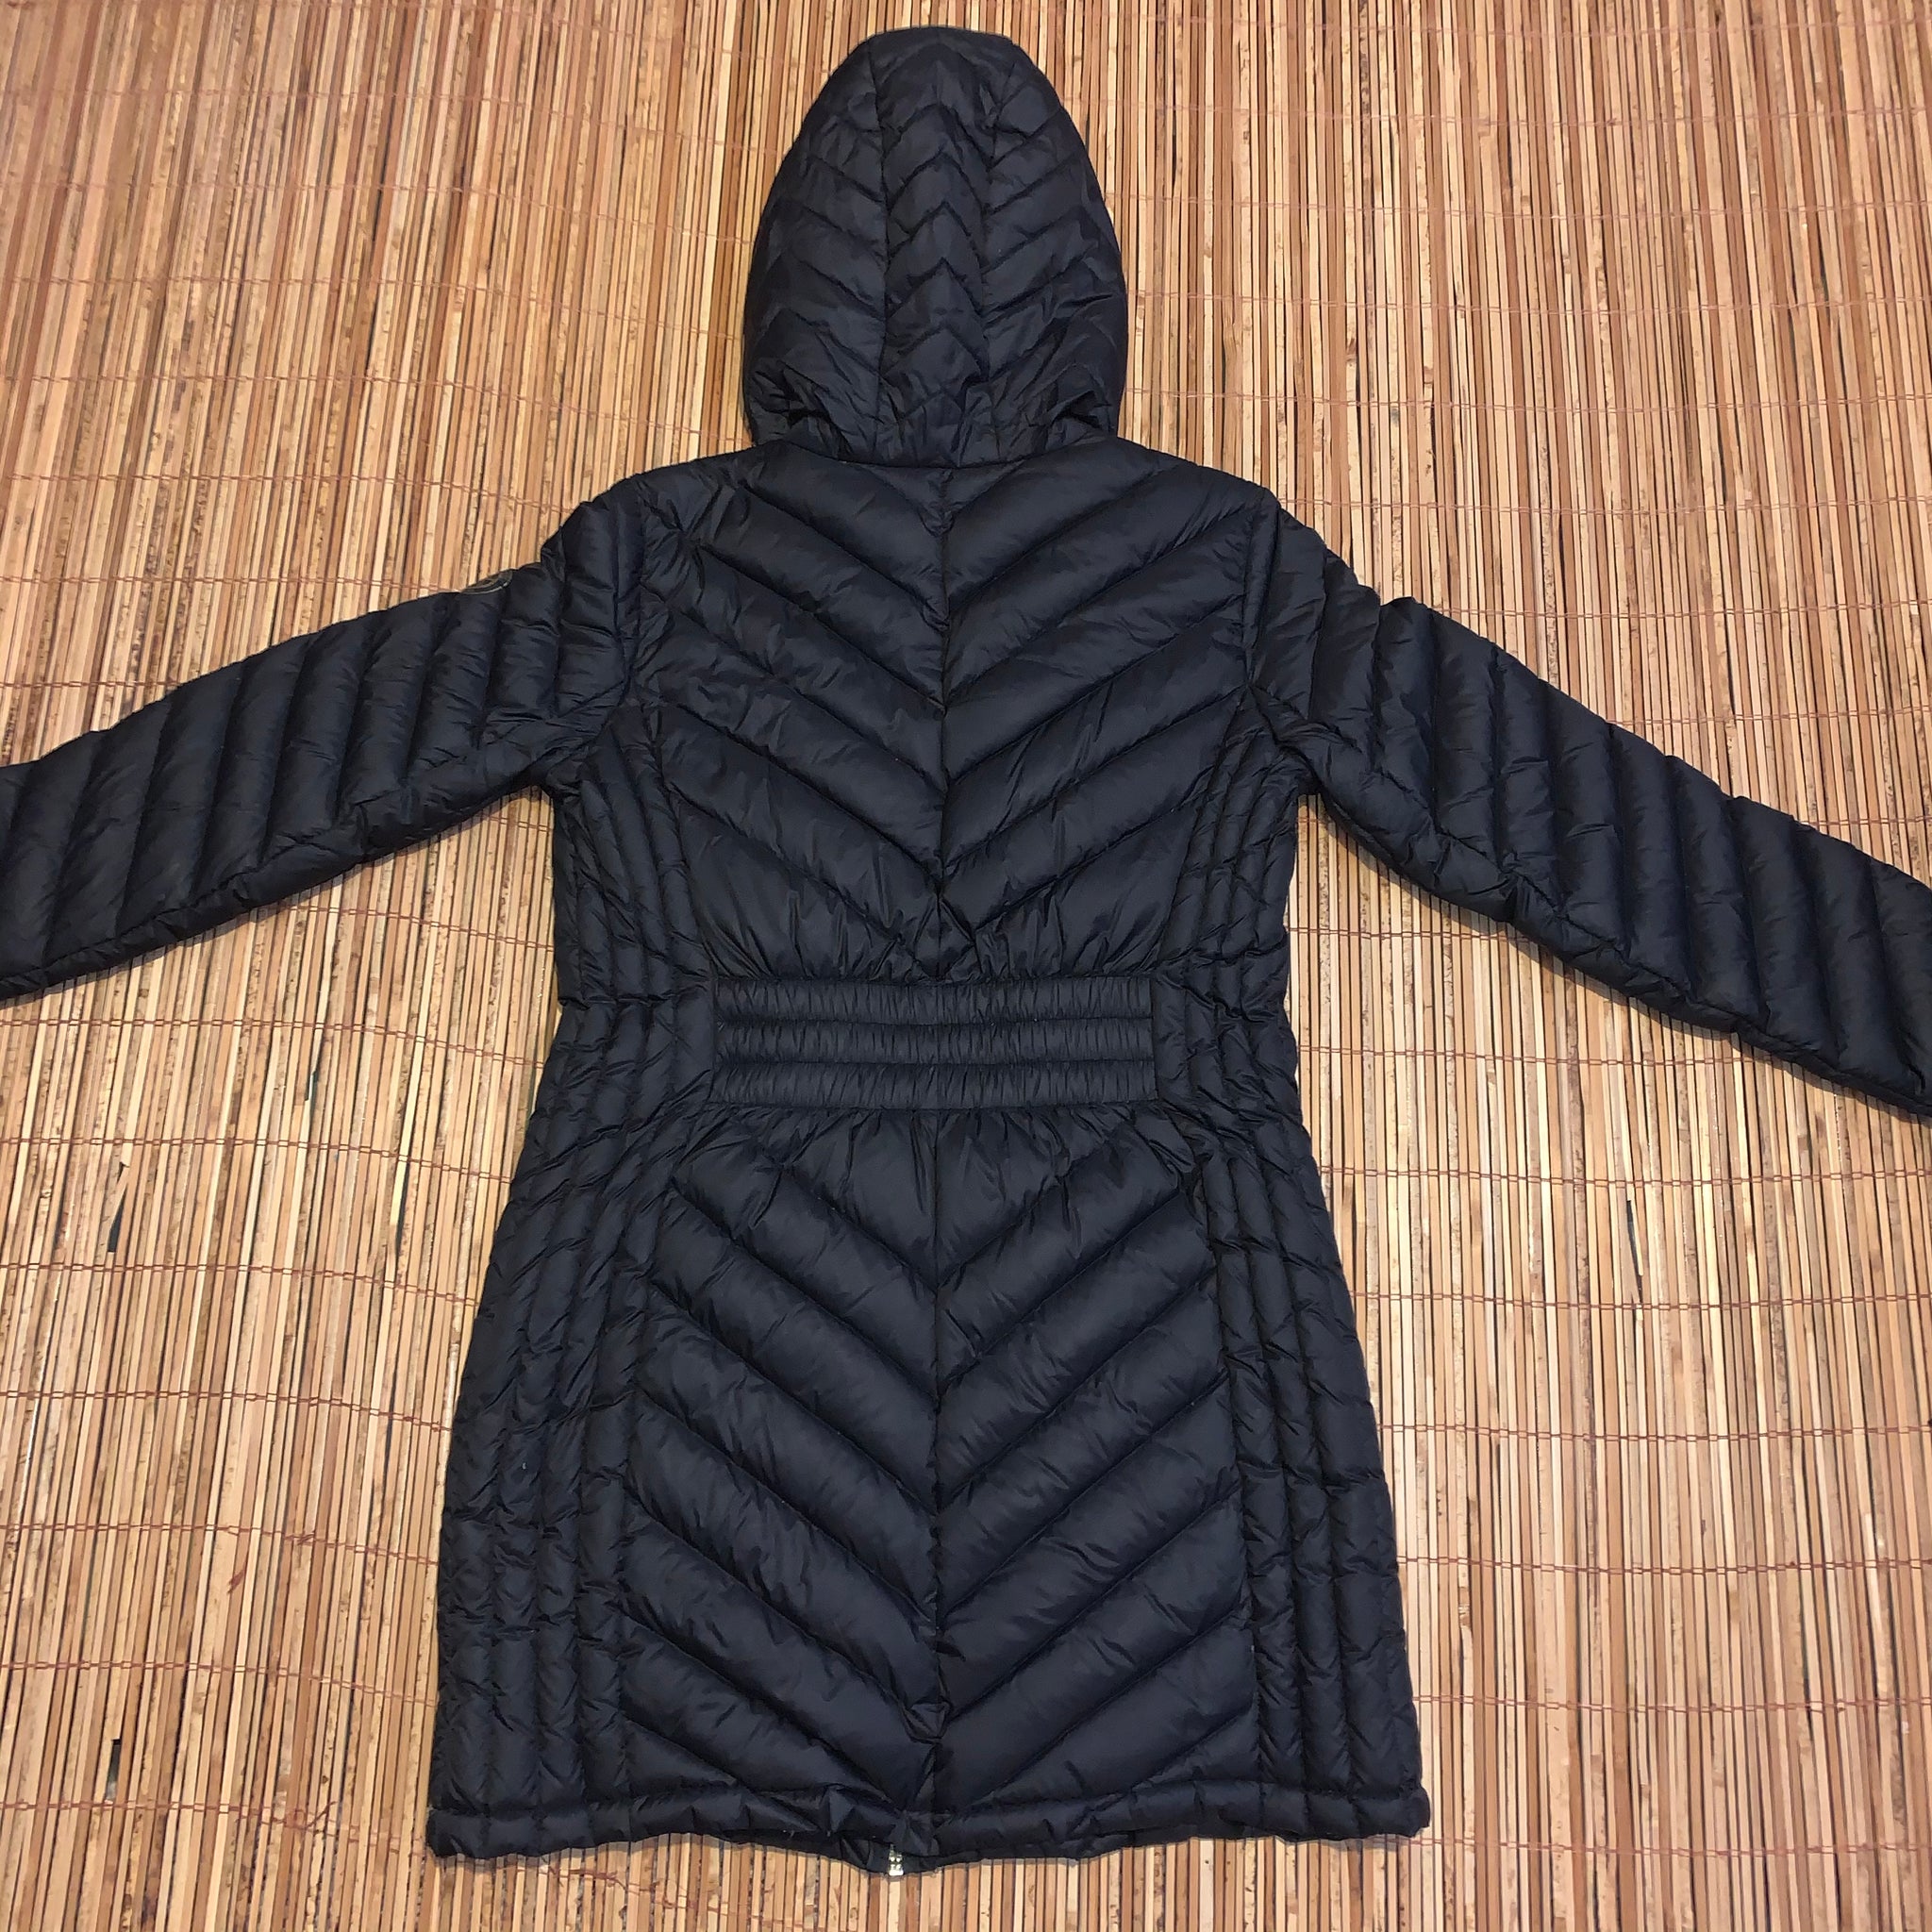 Michael Kors Packable Down Fill Puffer Jacket Womens Size Small S Black  Coat  eBay